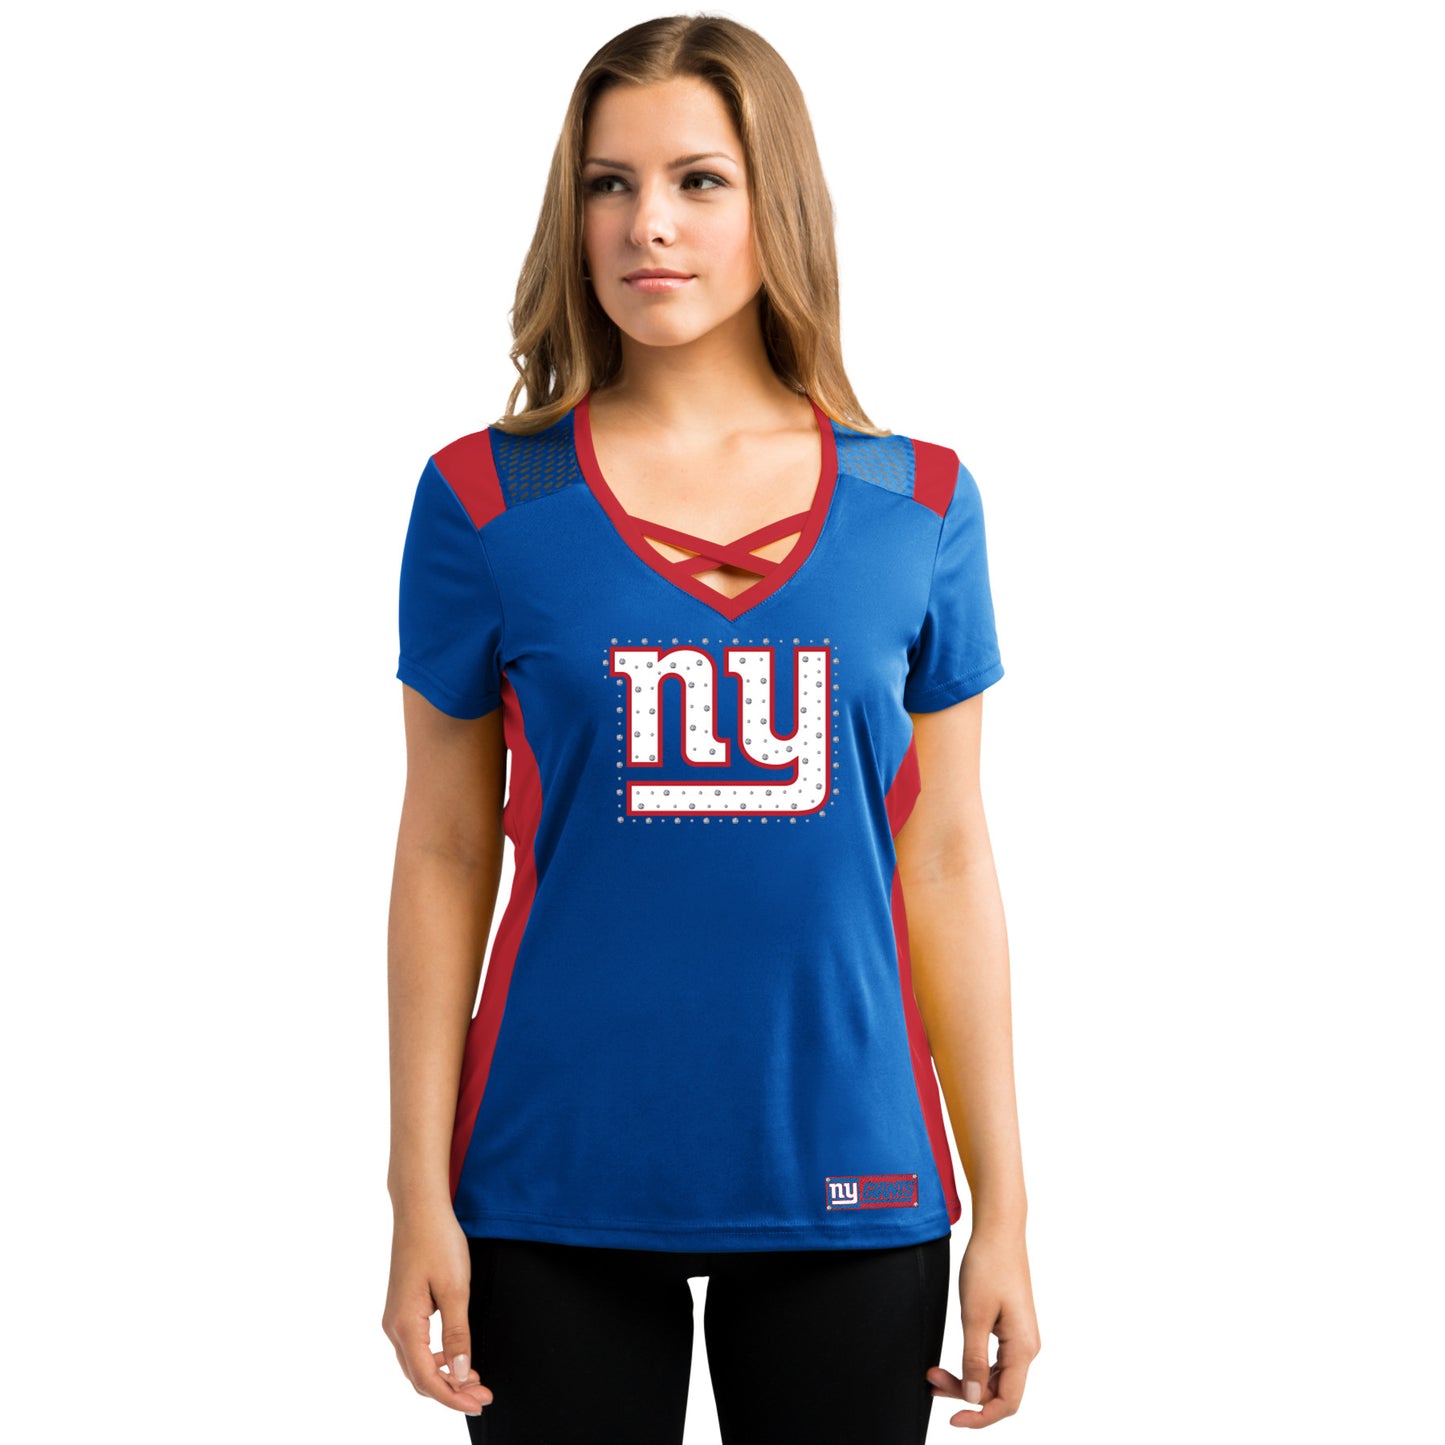 New York Giants NFL Women's Draft Me Jersey By Majestic